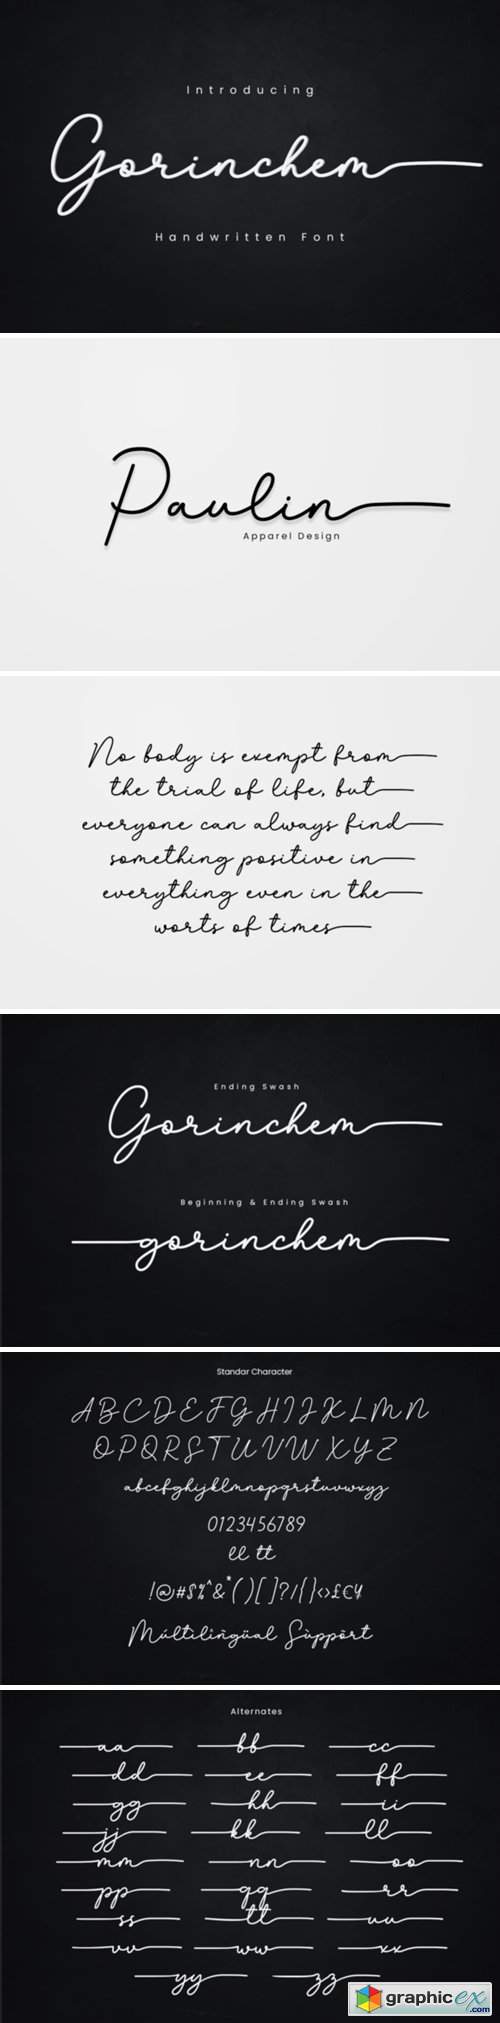  Gorinchem Font 